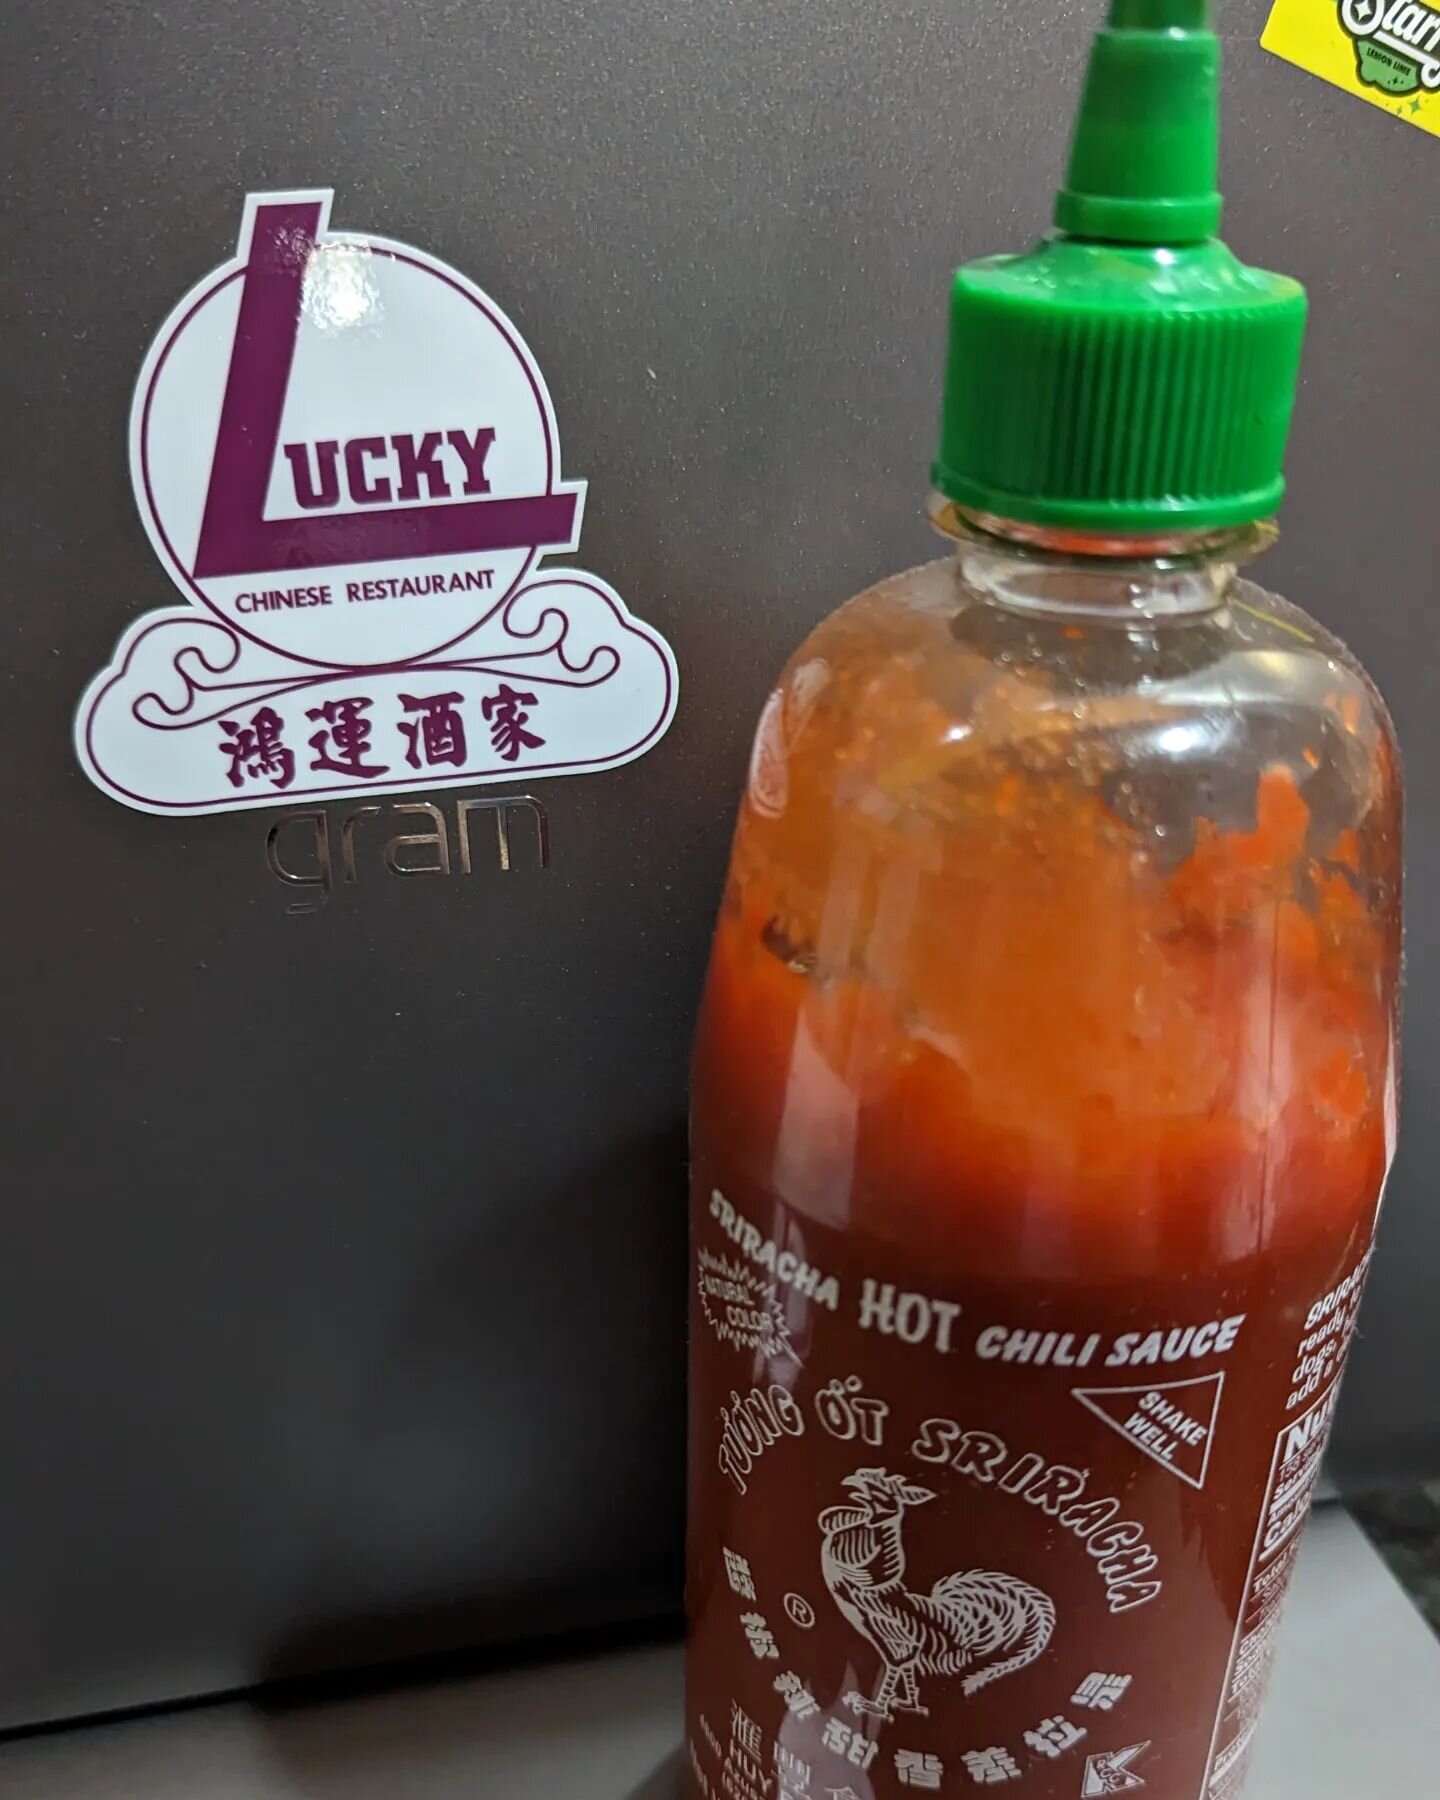 Due to a shortage of chili, we are limiting Sriracha hot sauce to one per item upon request

debido a la escasez de chile, estamos limitando la salsa picante Sriracha a una por art&iacute;culo previa solicitud

#luckychineserestaurant #elcentroca #ea